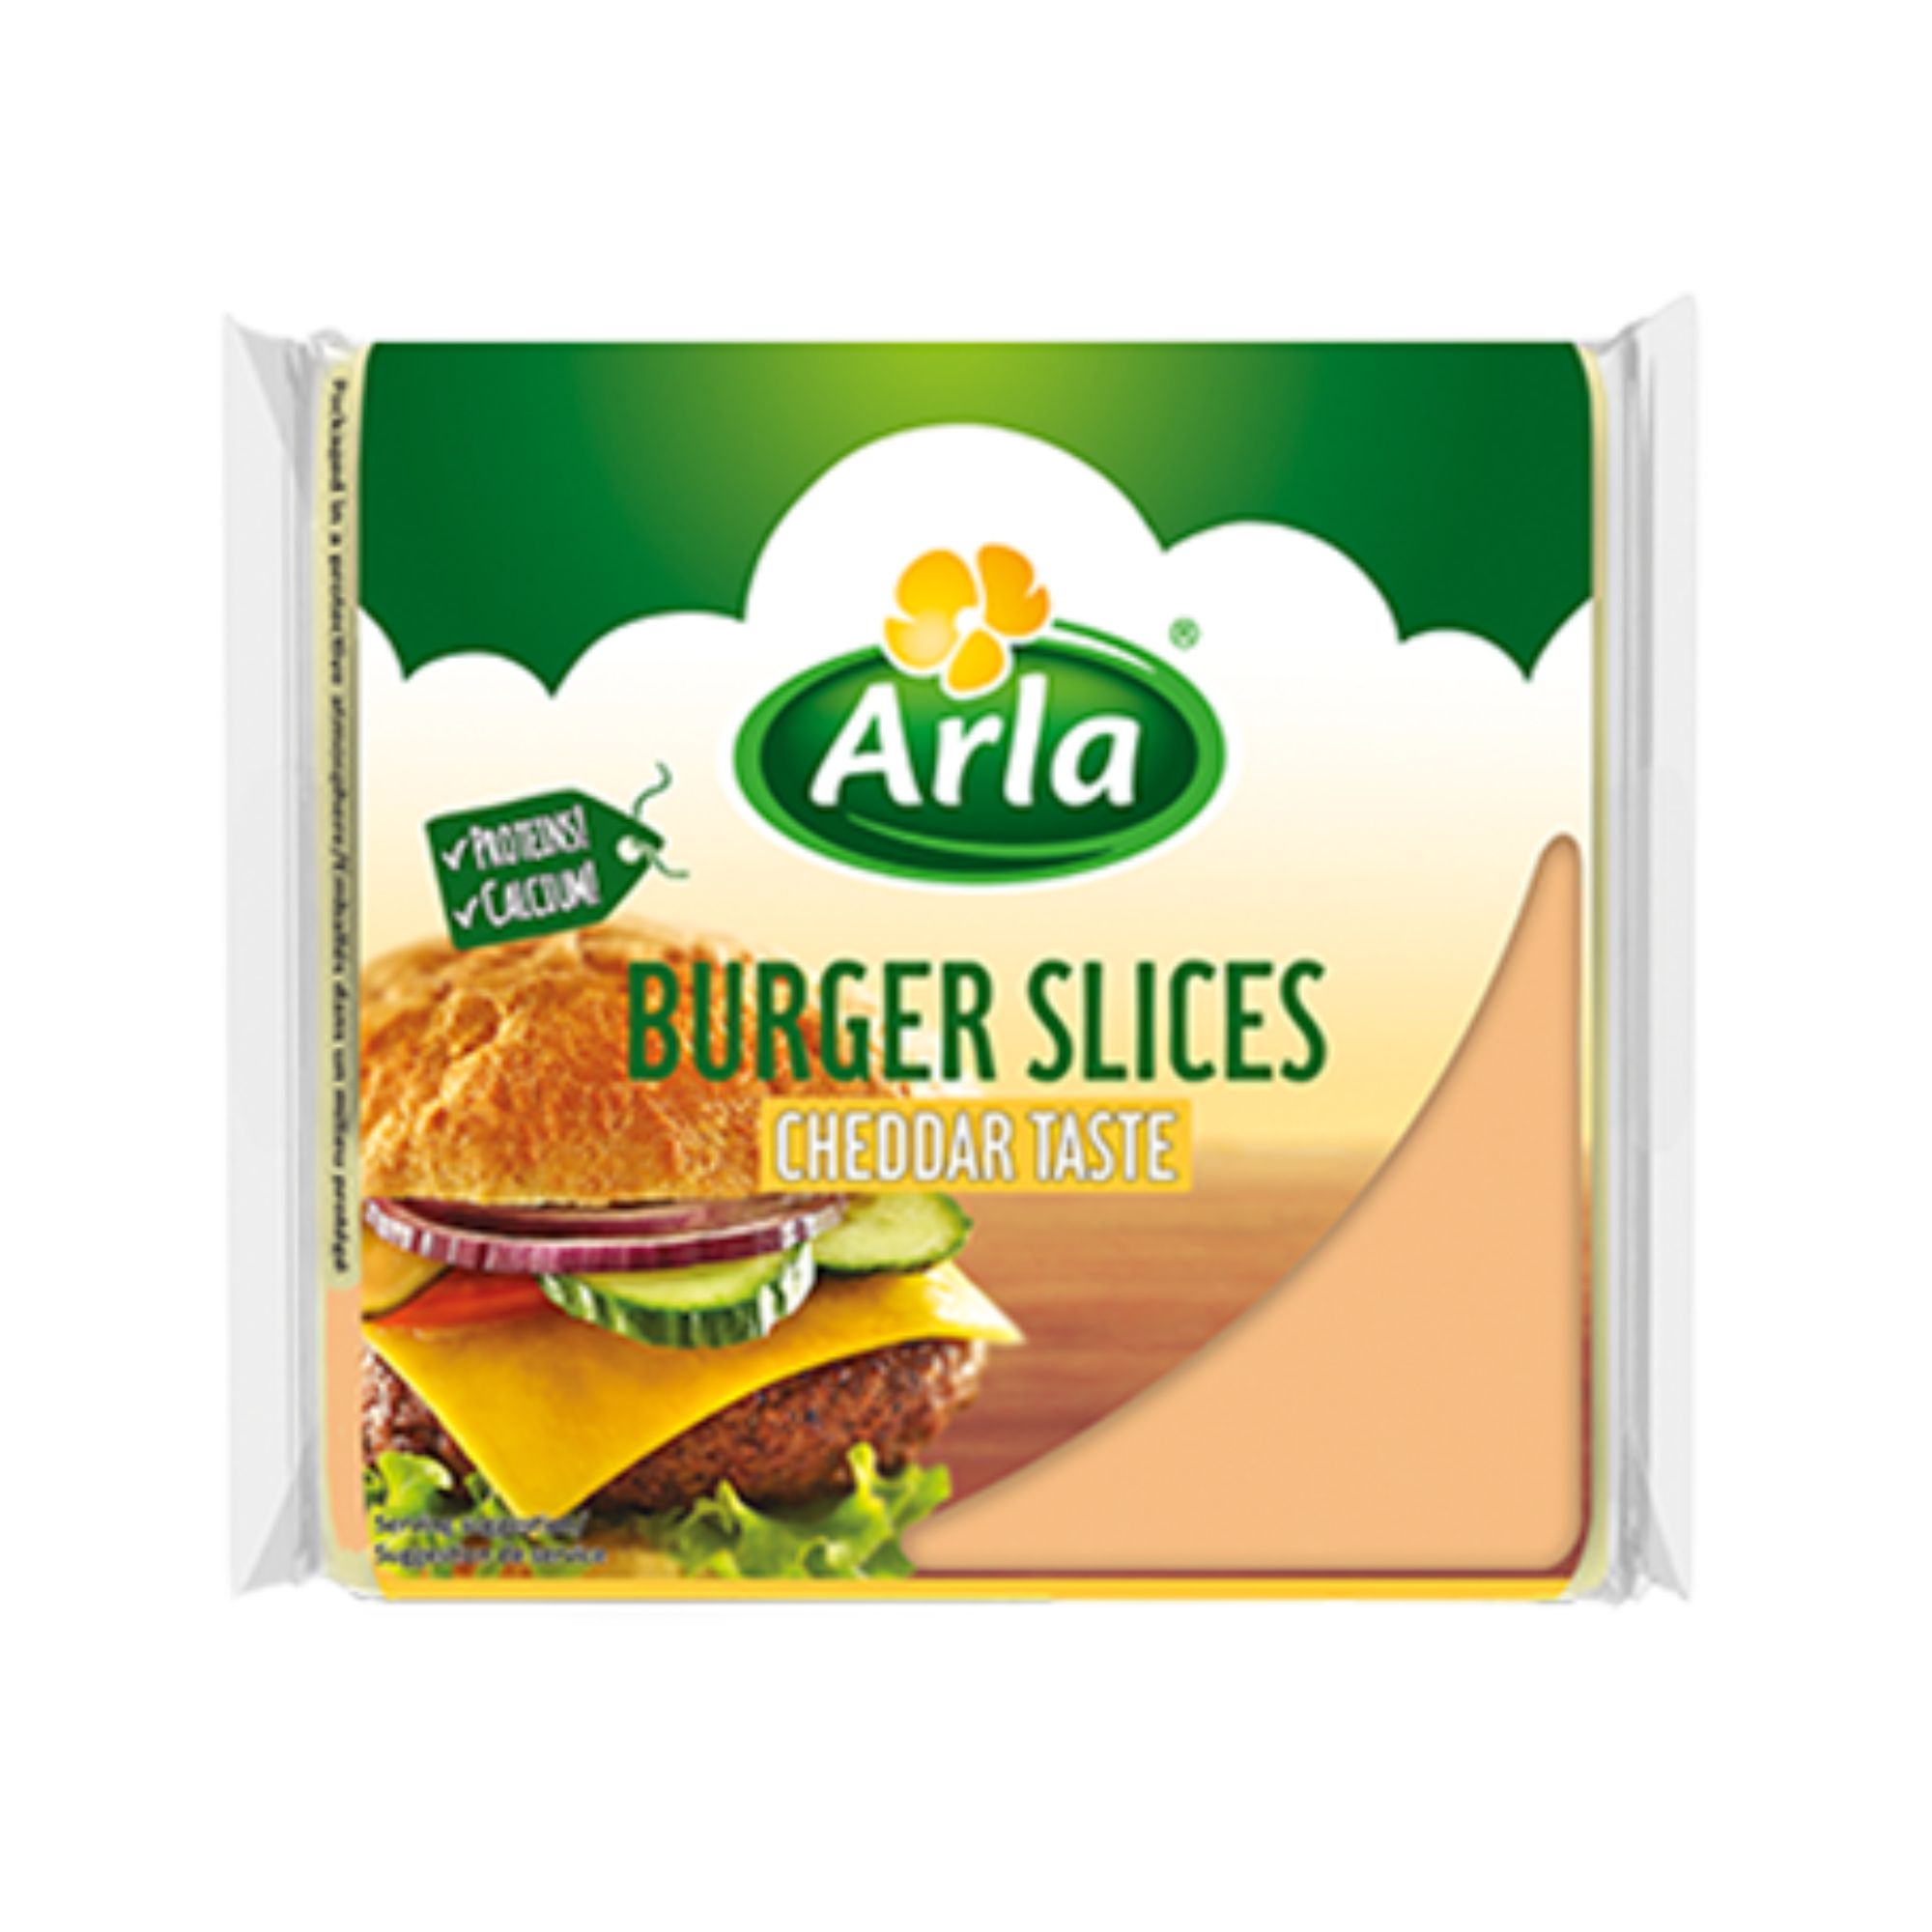 Arla Burger Slices Cheddar